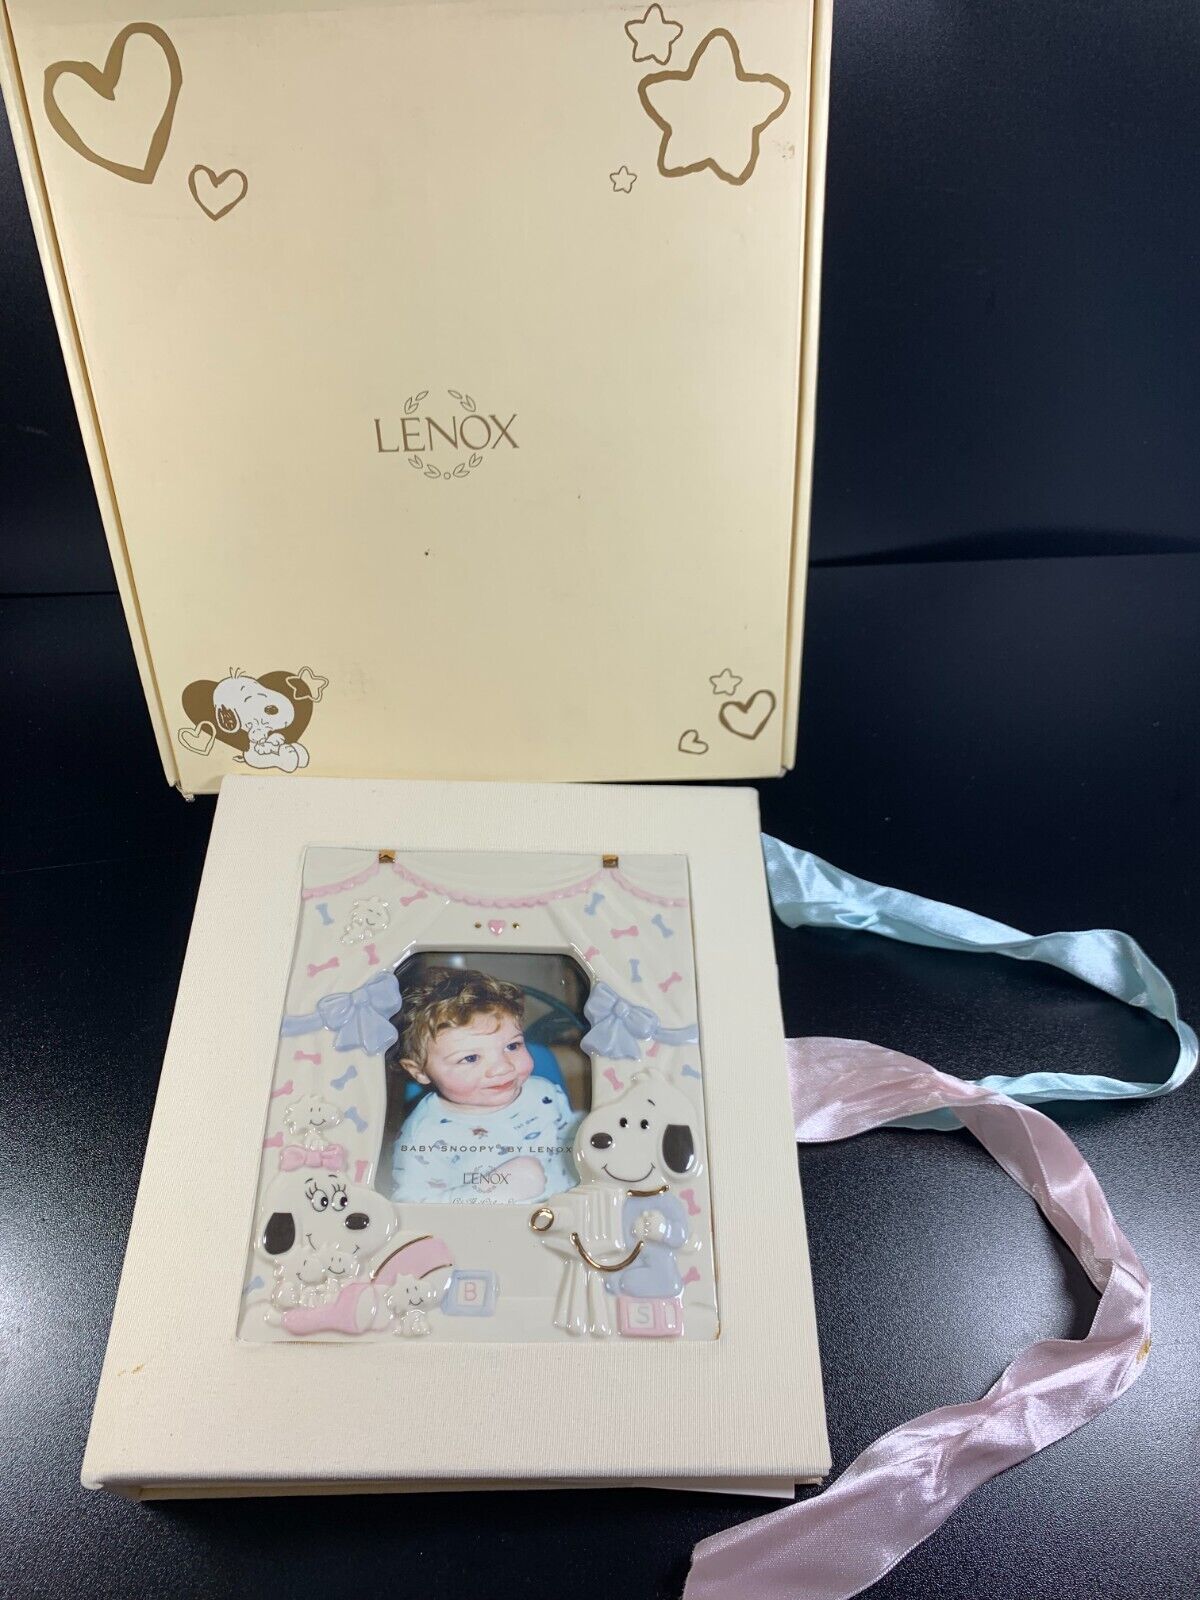 Lenox Baby Snoopy Photo Frame Album - unused in original box, imperfect